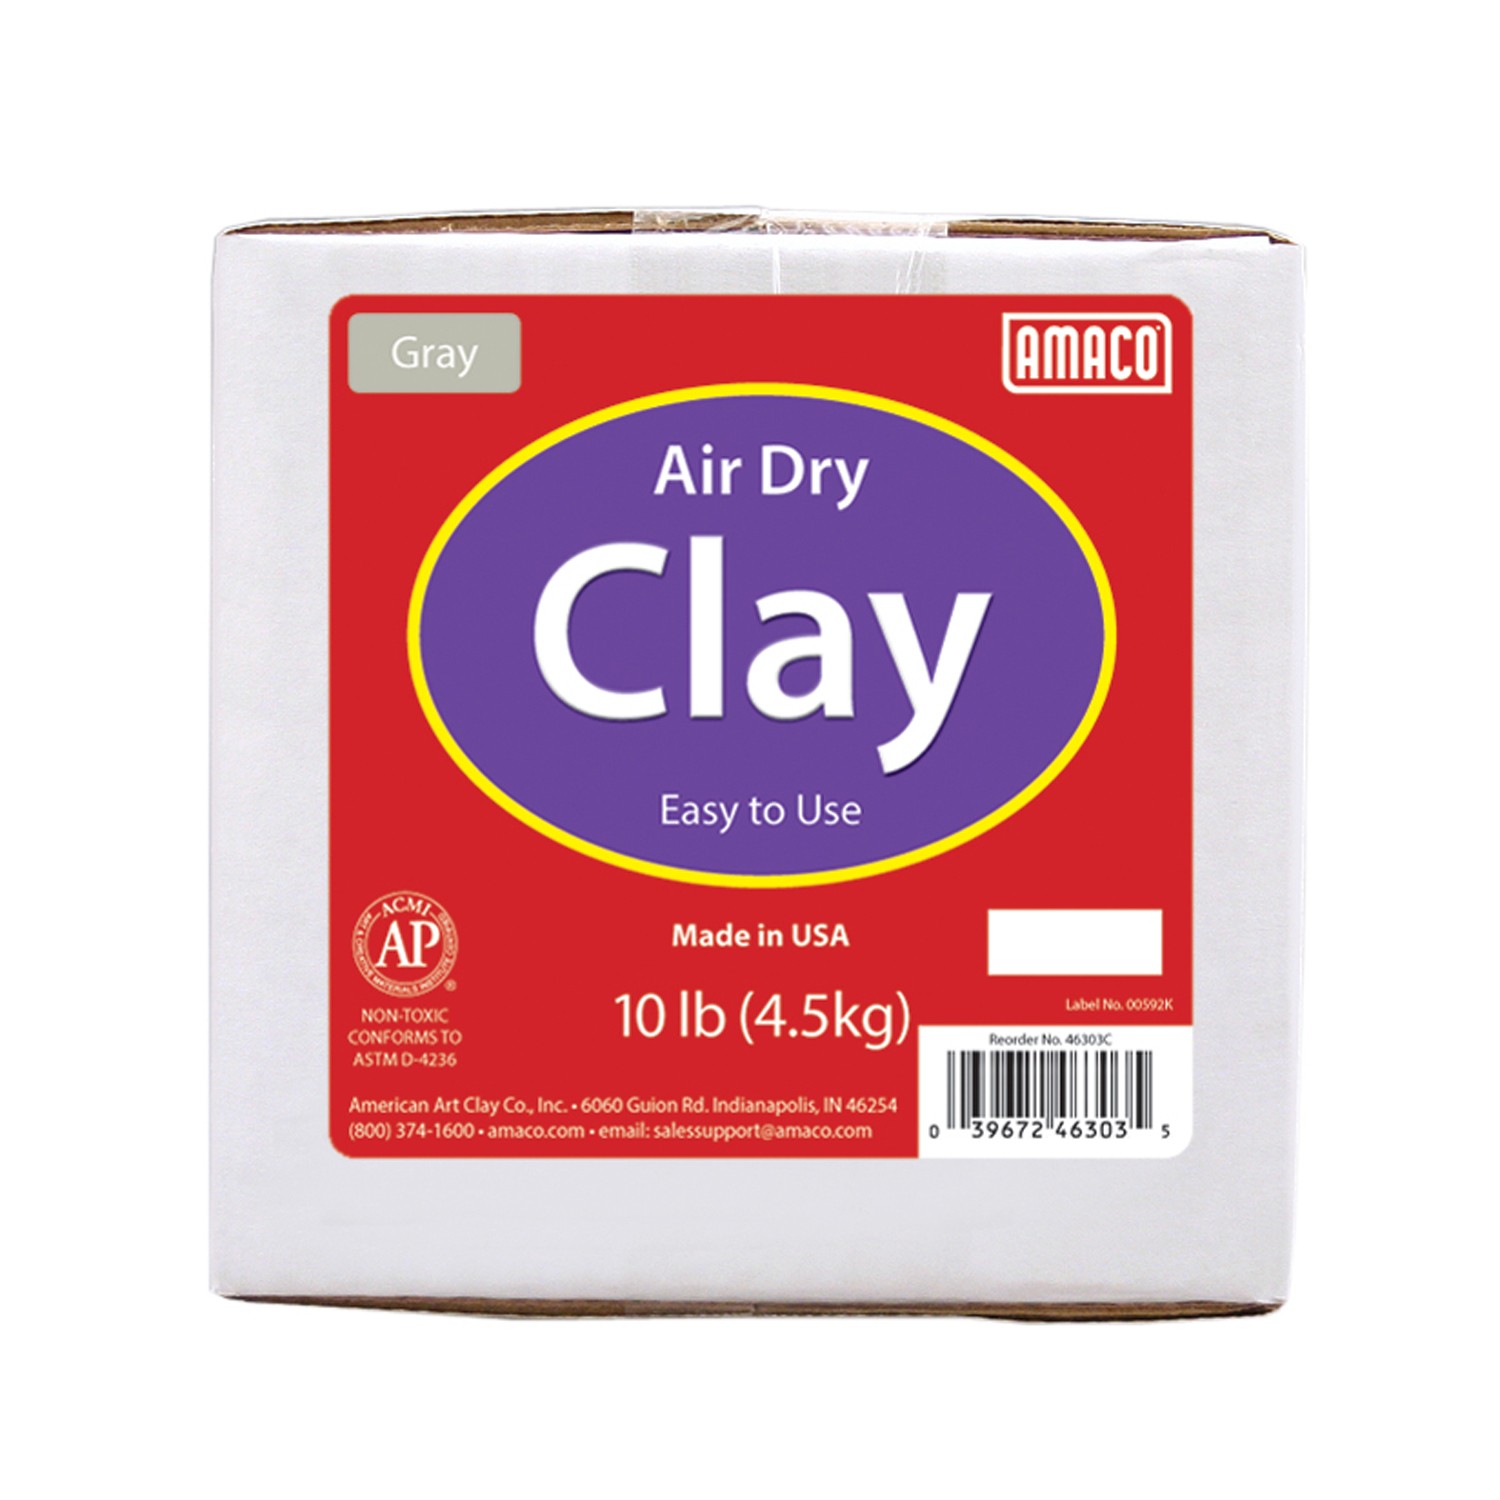 Air Dry Clay, Gray, 10 lbs